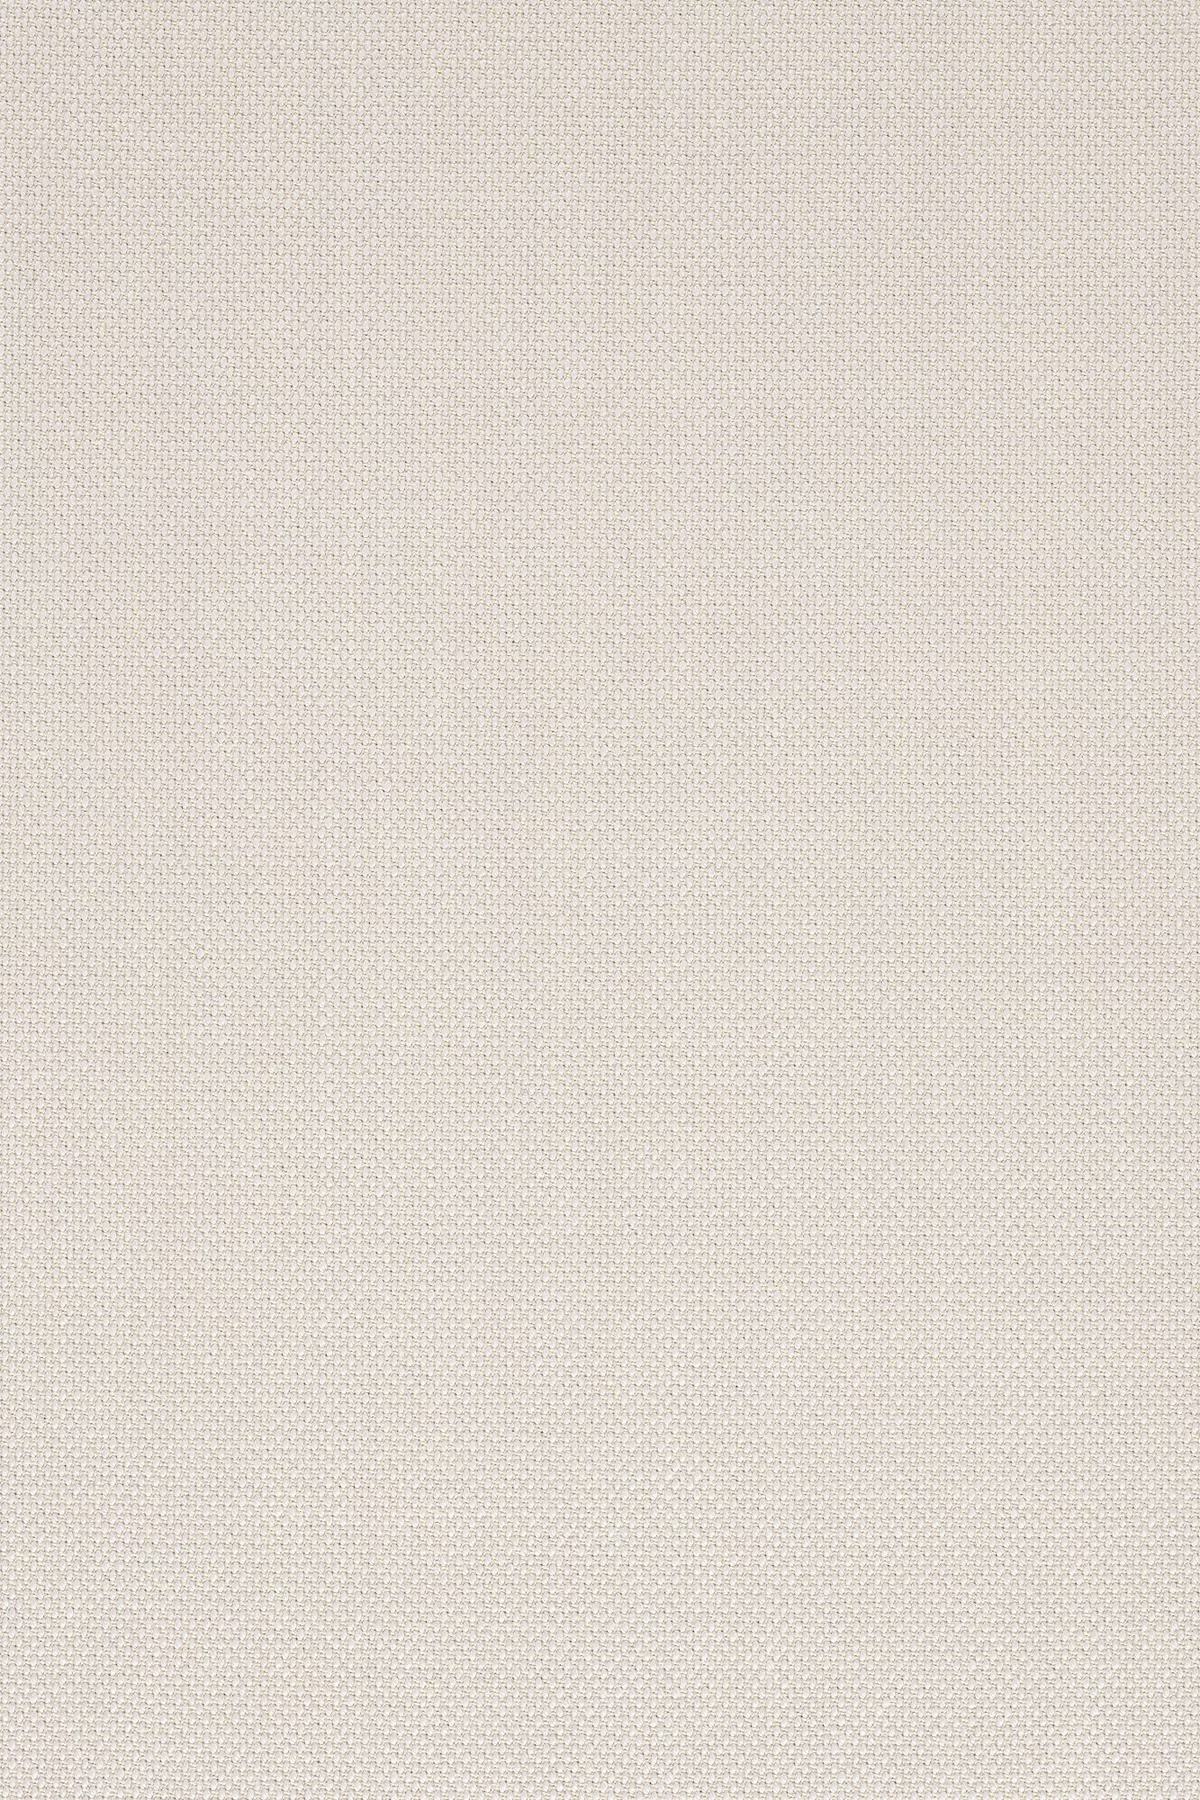 Fabric sample Steelcut Trio 3 226 white